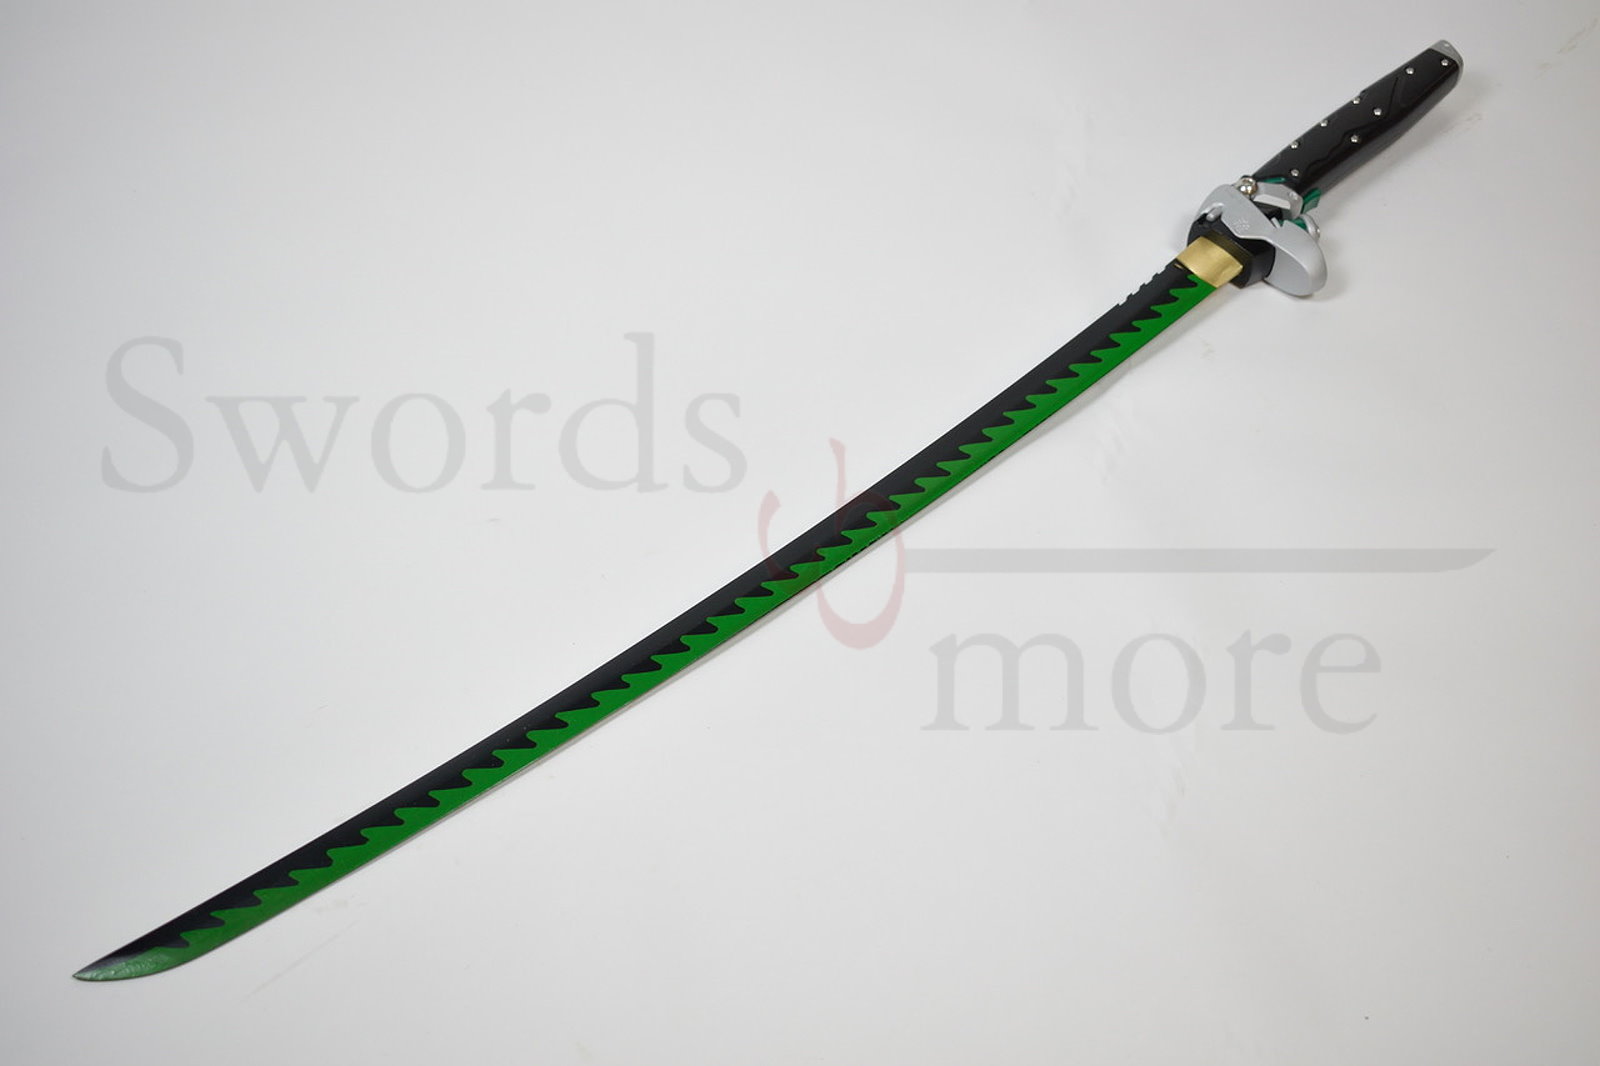 Overwatch - Sword of Genji, handforged